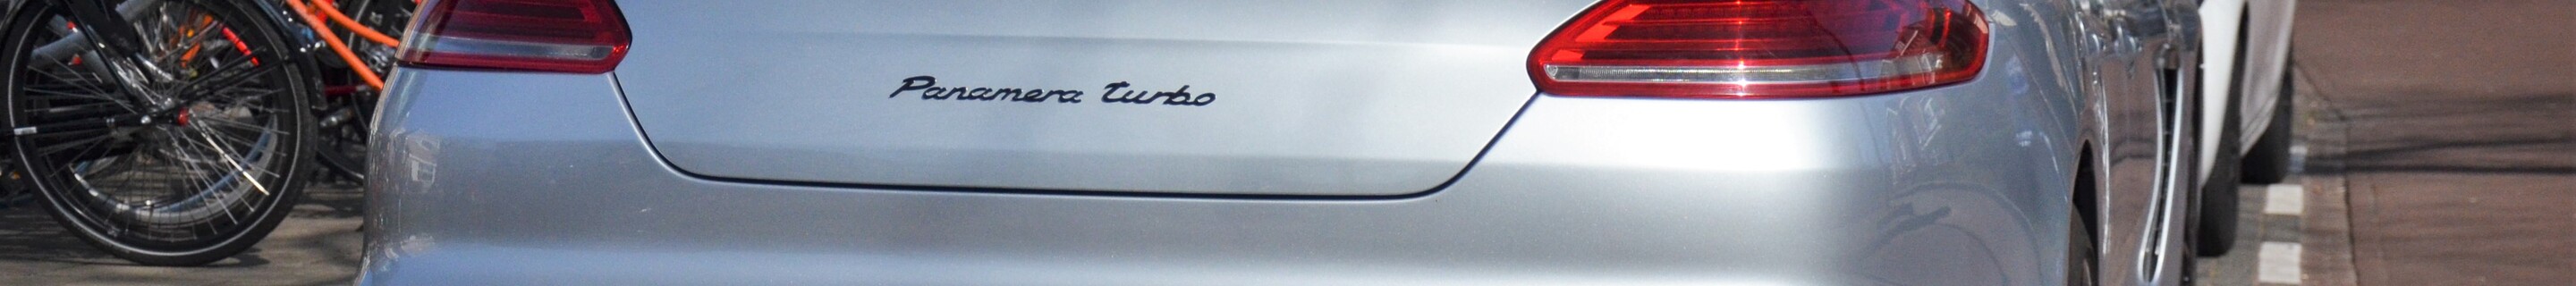 Porsche 970 Panamera Turbo MkII